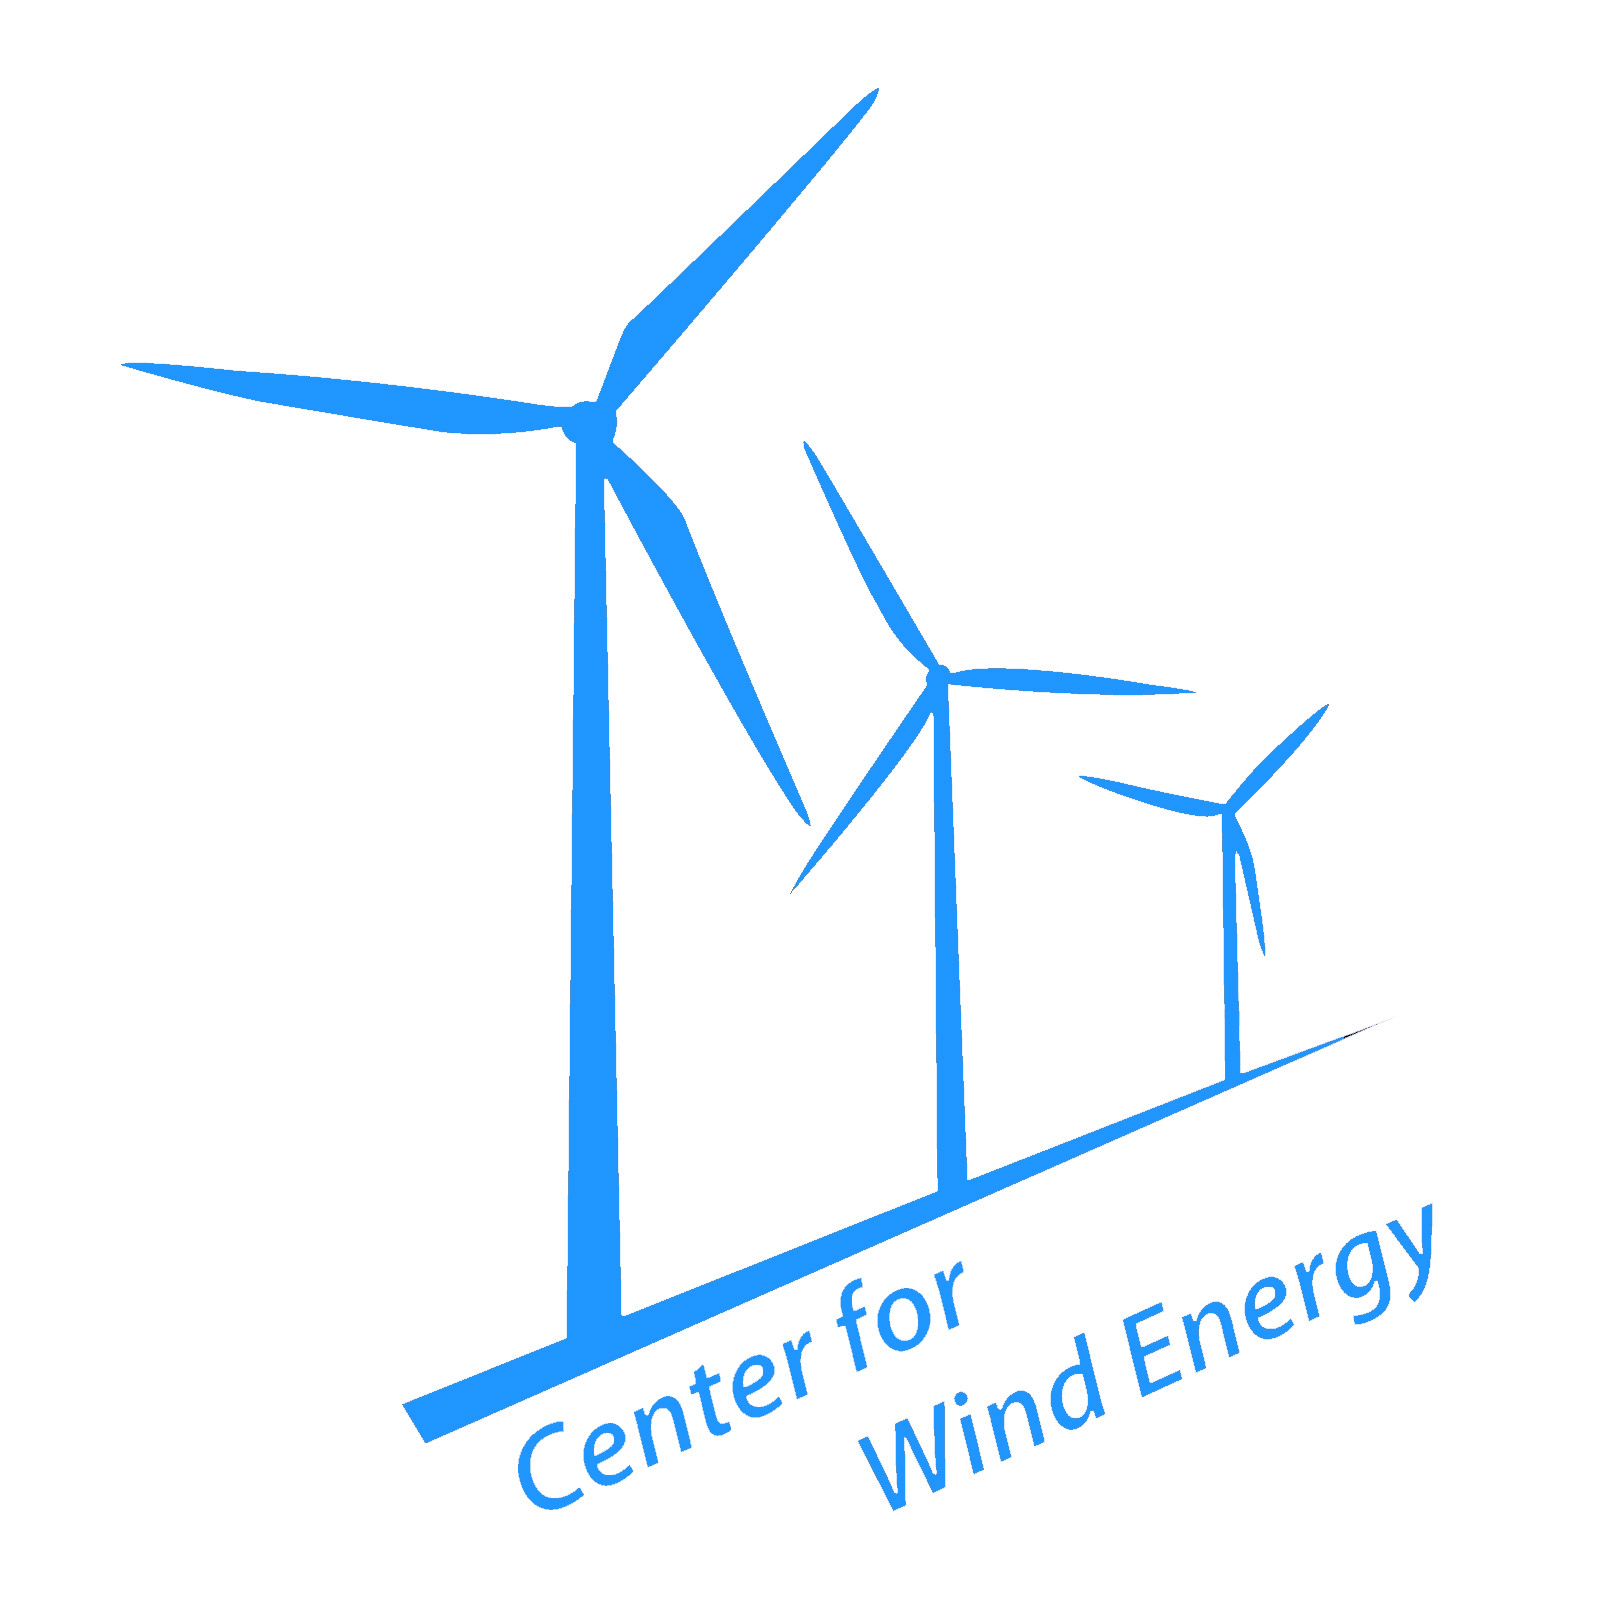 Virginia Center for Wind Energy